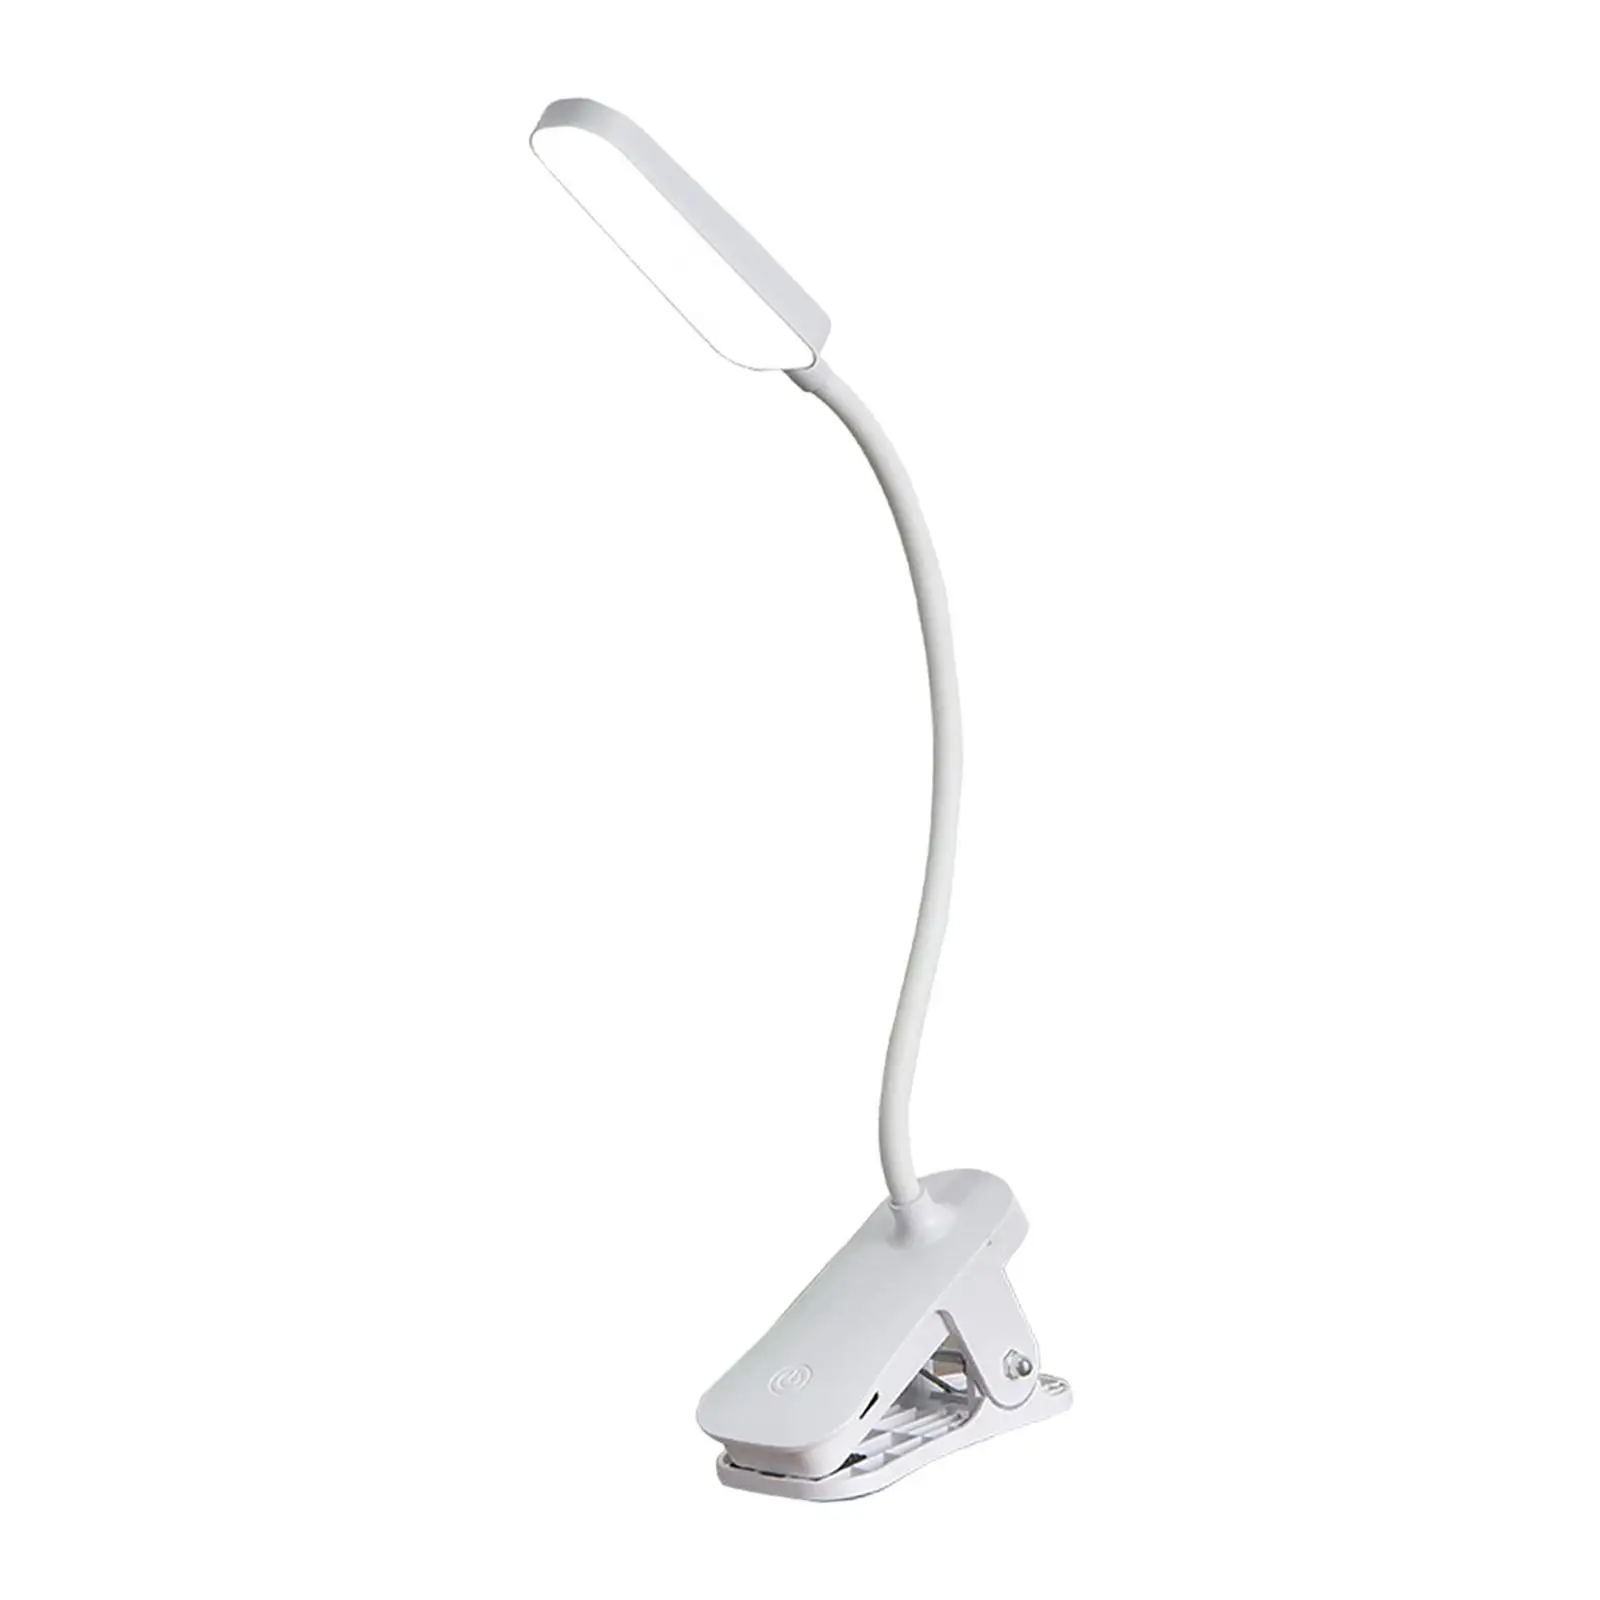 Flexible Gooseneck LED Clip On Table Light Lighting USB 3 Modes Table Lamp Nightlight for Piano Office Bedroom Study Home